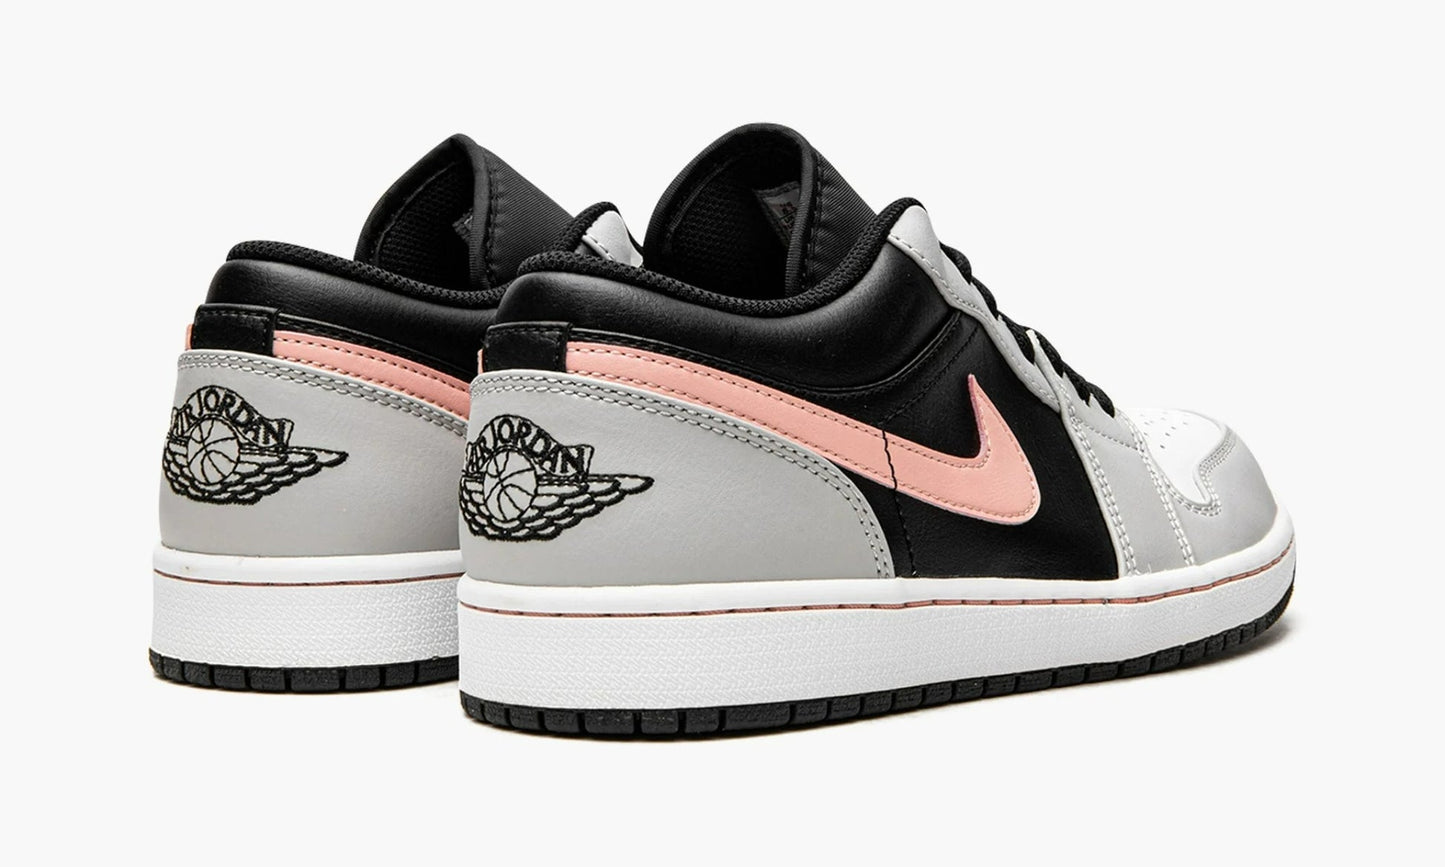 Air Jordan 1 Low "Black Grey Pink" - 553558 062 | Grailshop